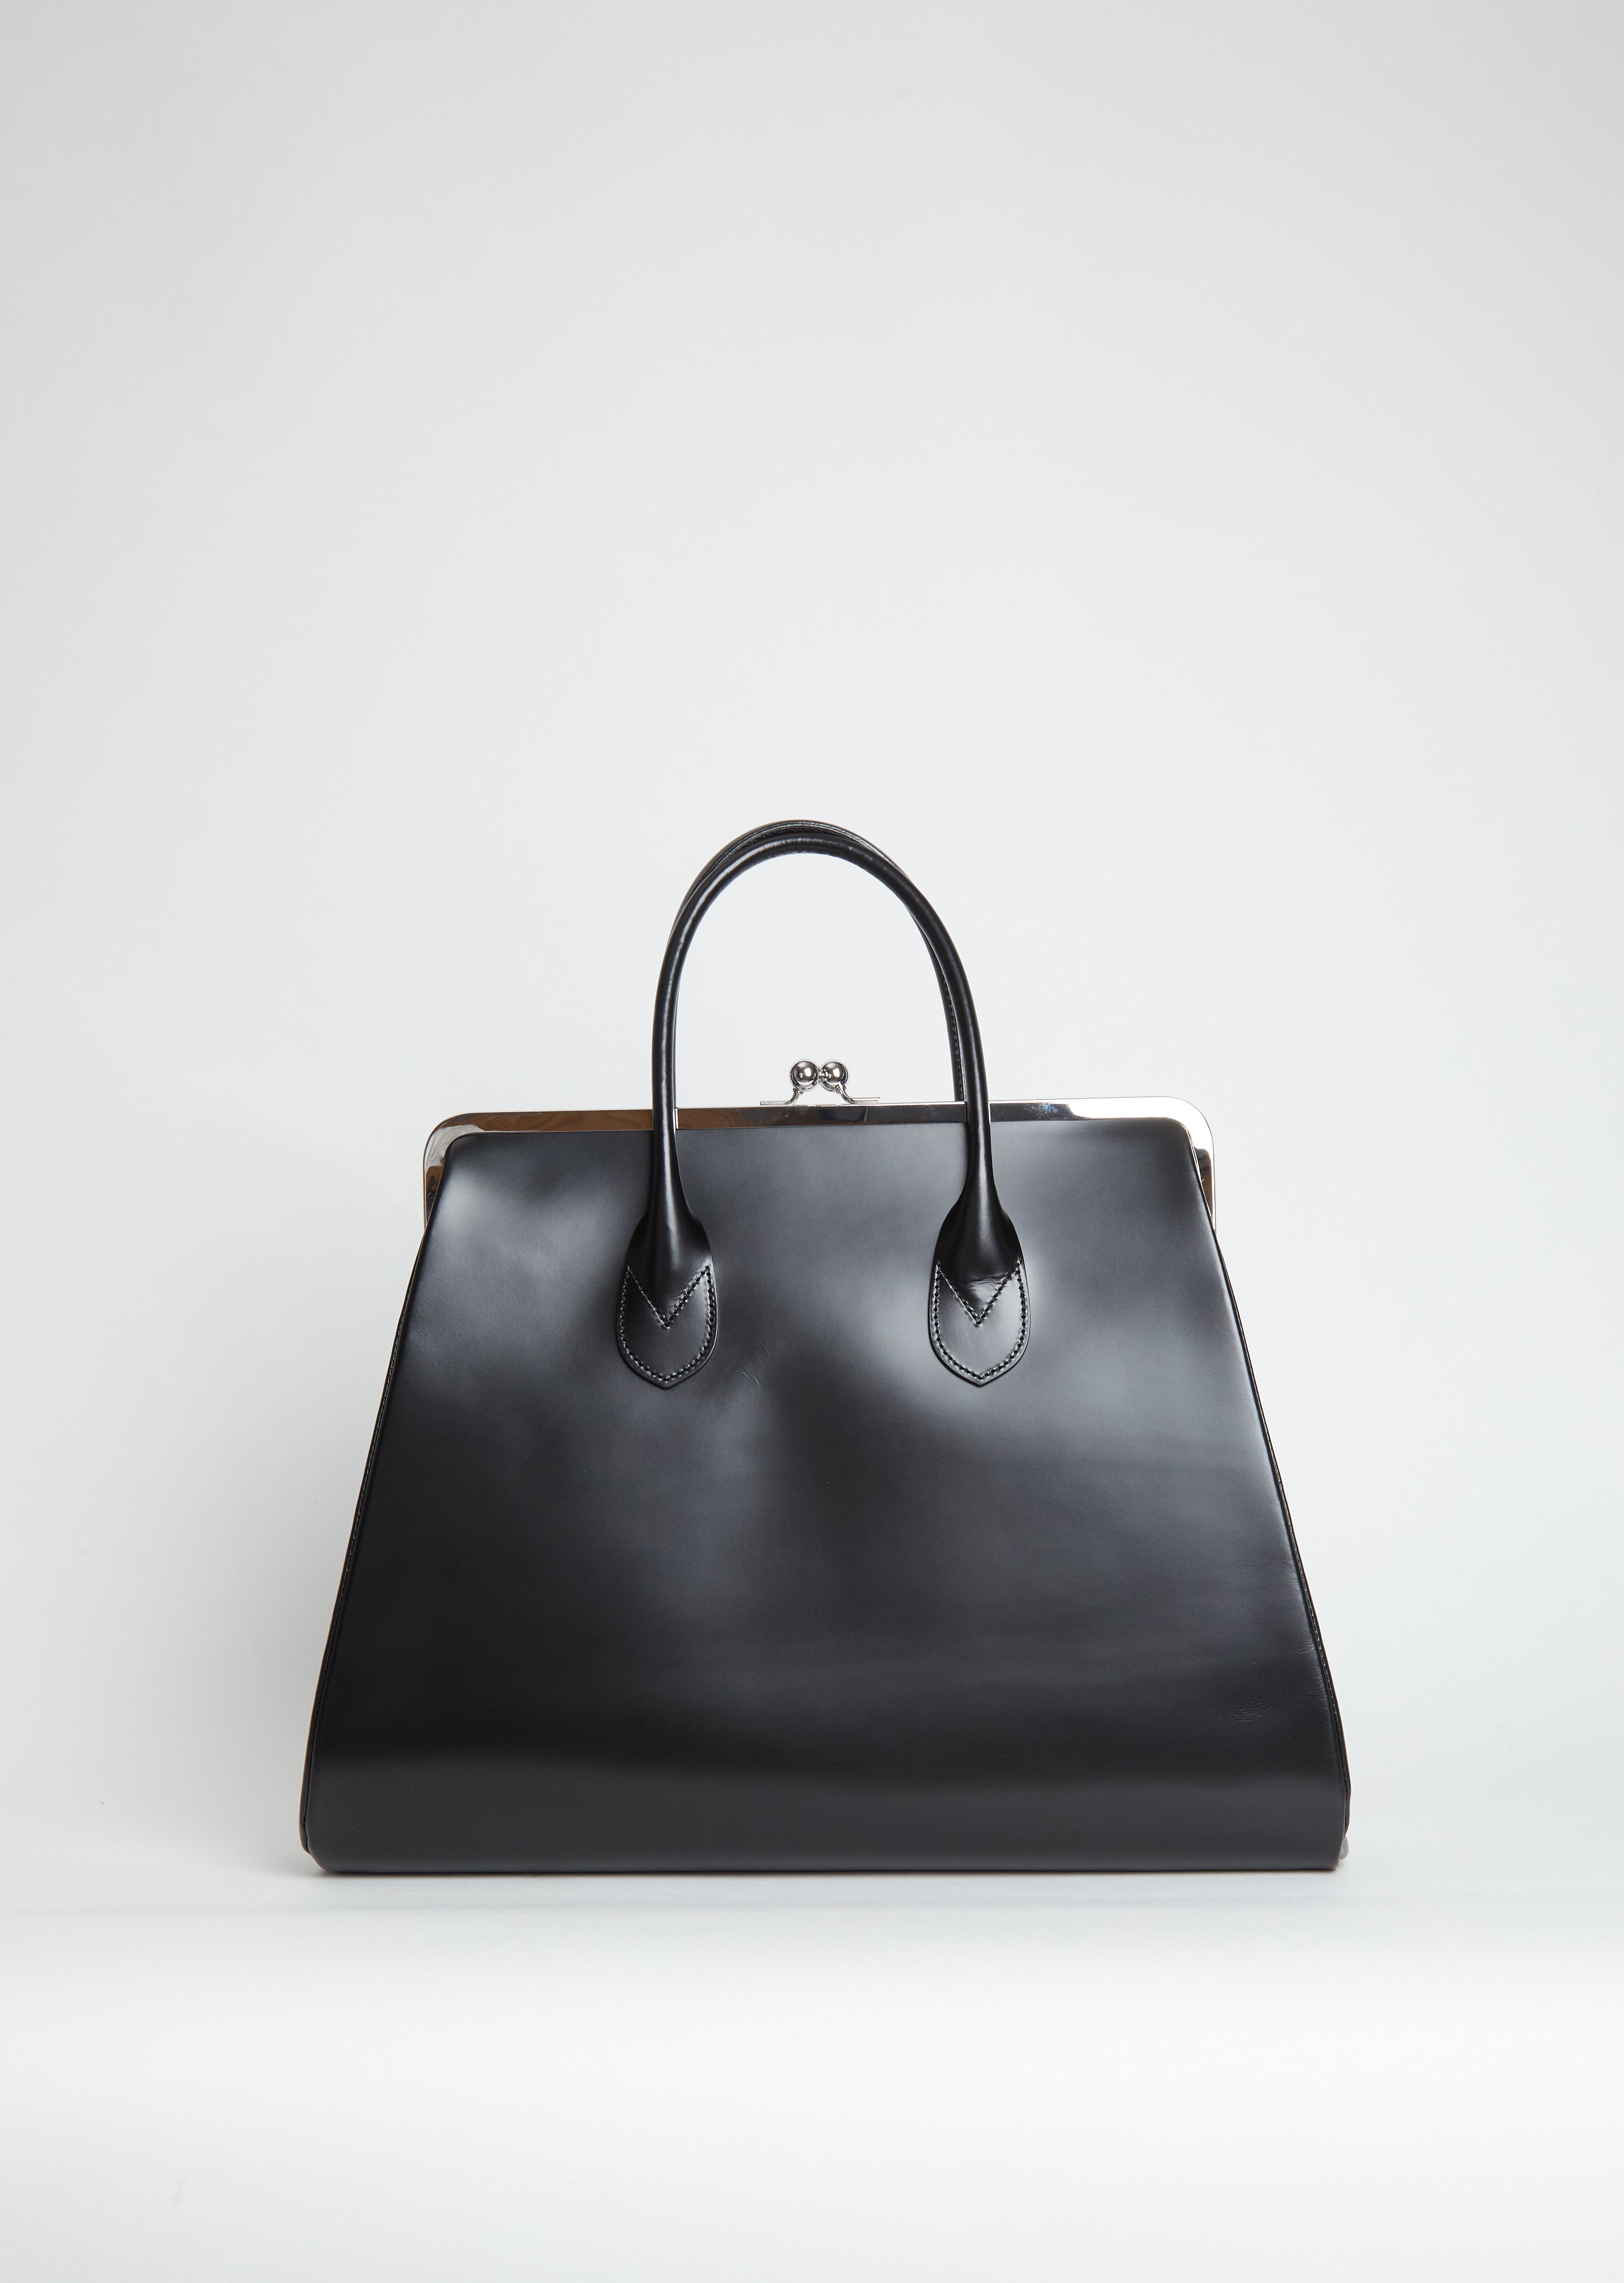 Comme des Garcons Ninomiya WOMEN BAGS LUGGAGE AND TRAVEL, Chanel Vintage  Handbag 380533